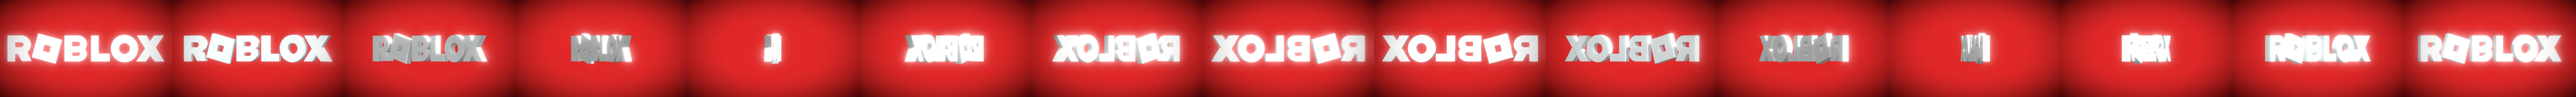 ROBLOX LOGO TUTORIAL: 3D Text